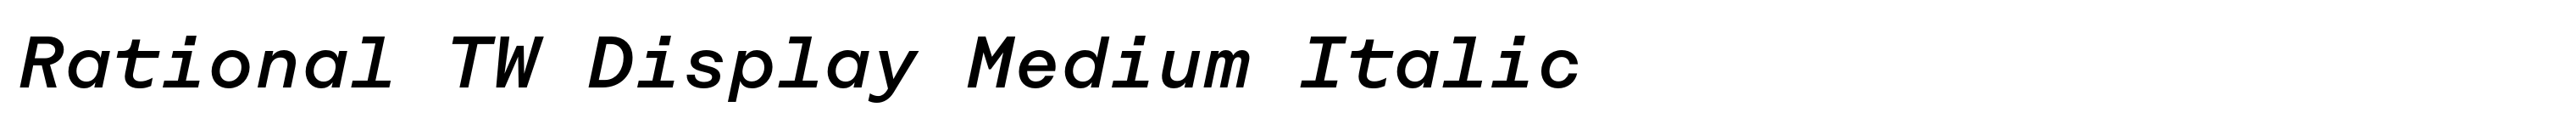 Rational TW Display Medium Italic